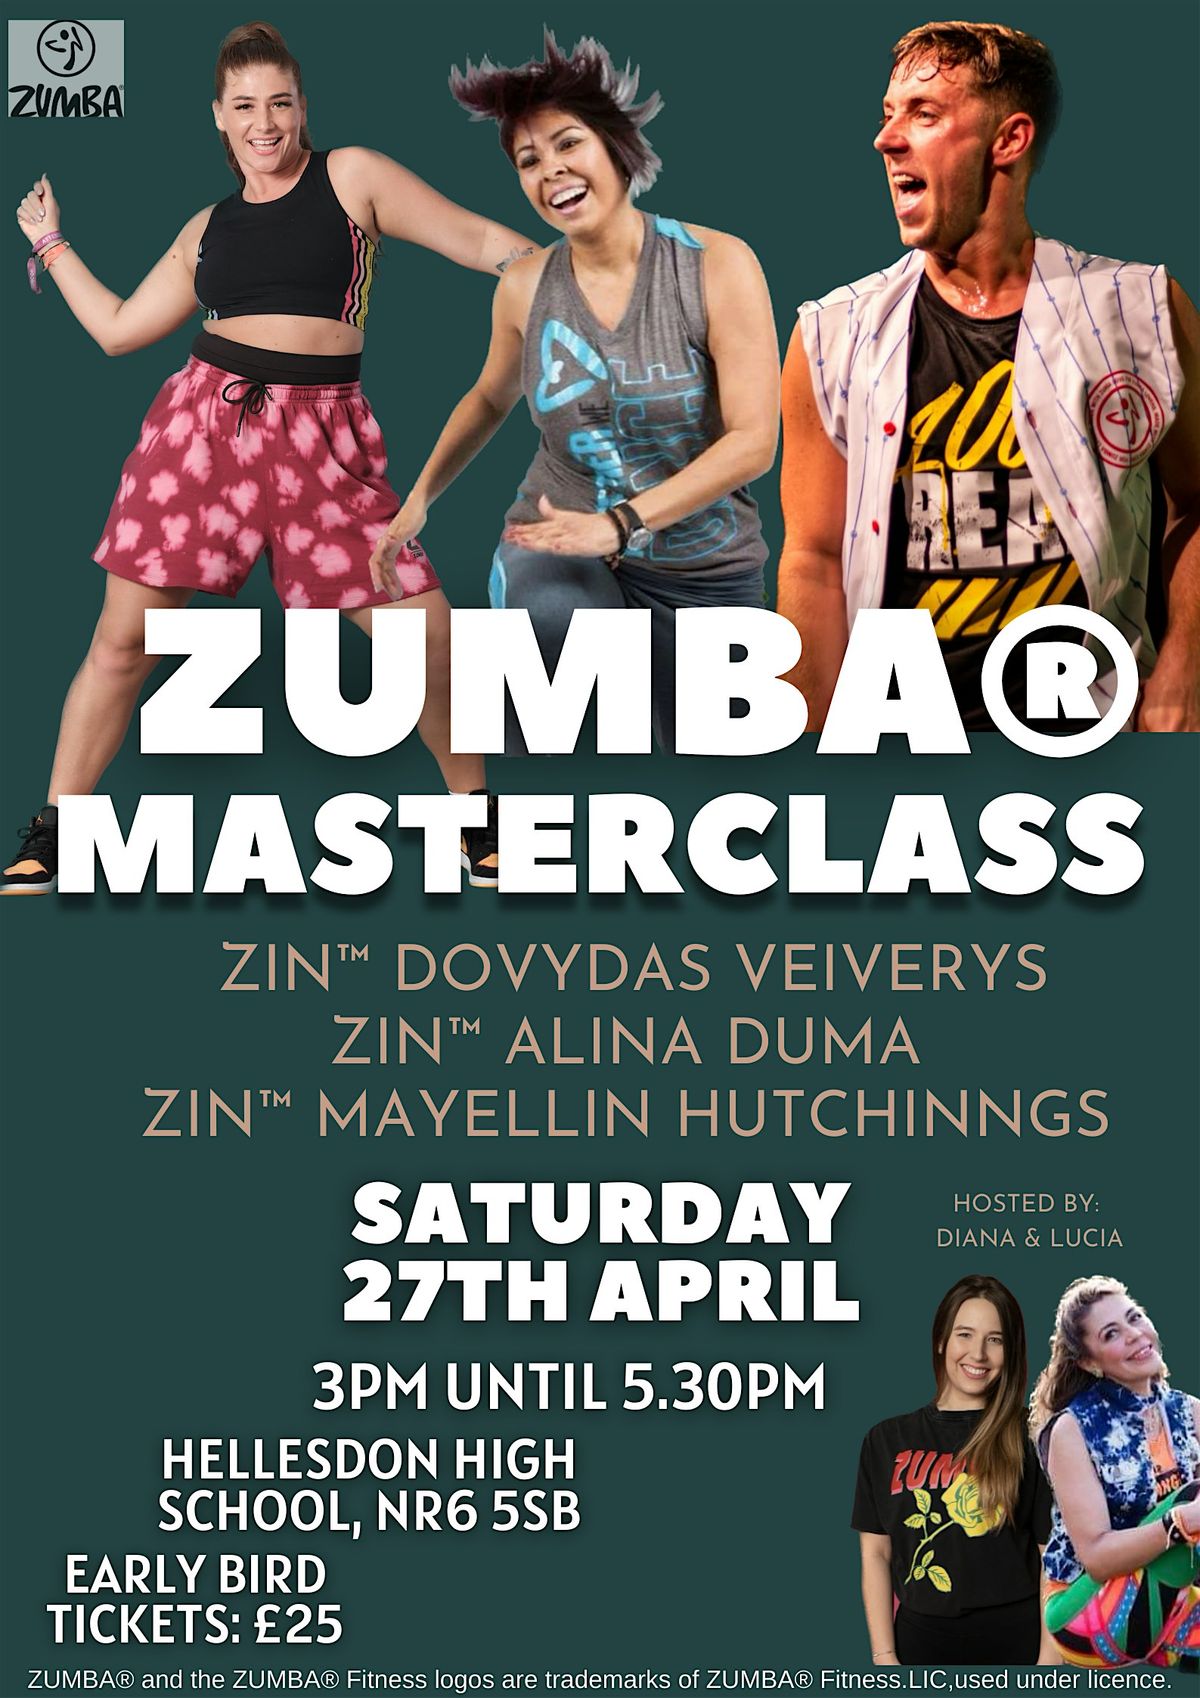 Zumba Masterclass with Dovydas Veiverys, Alina Duma & Mayellin Hutchinngs